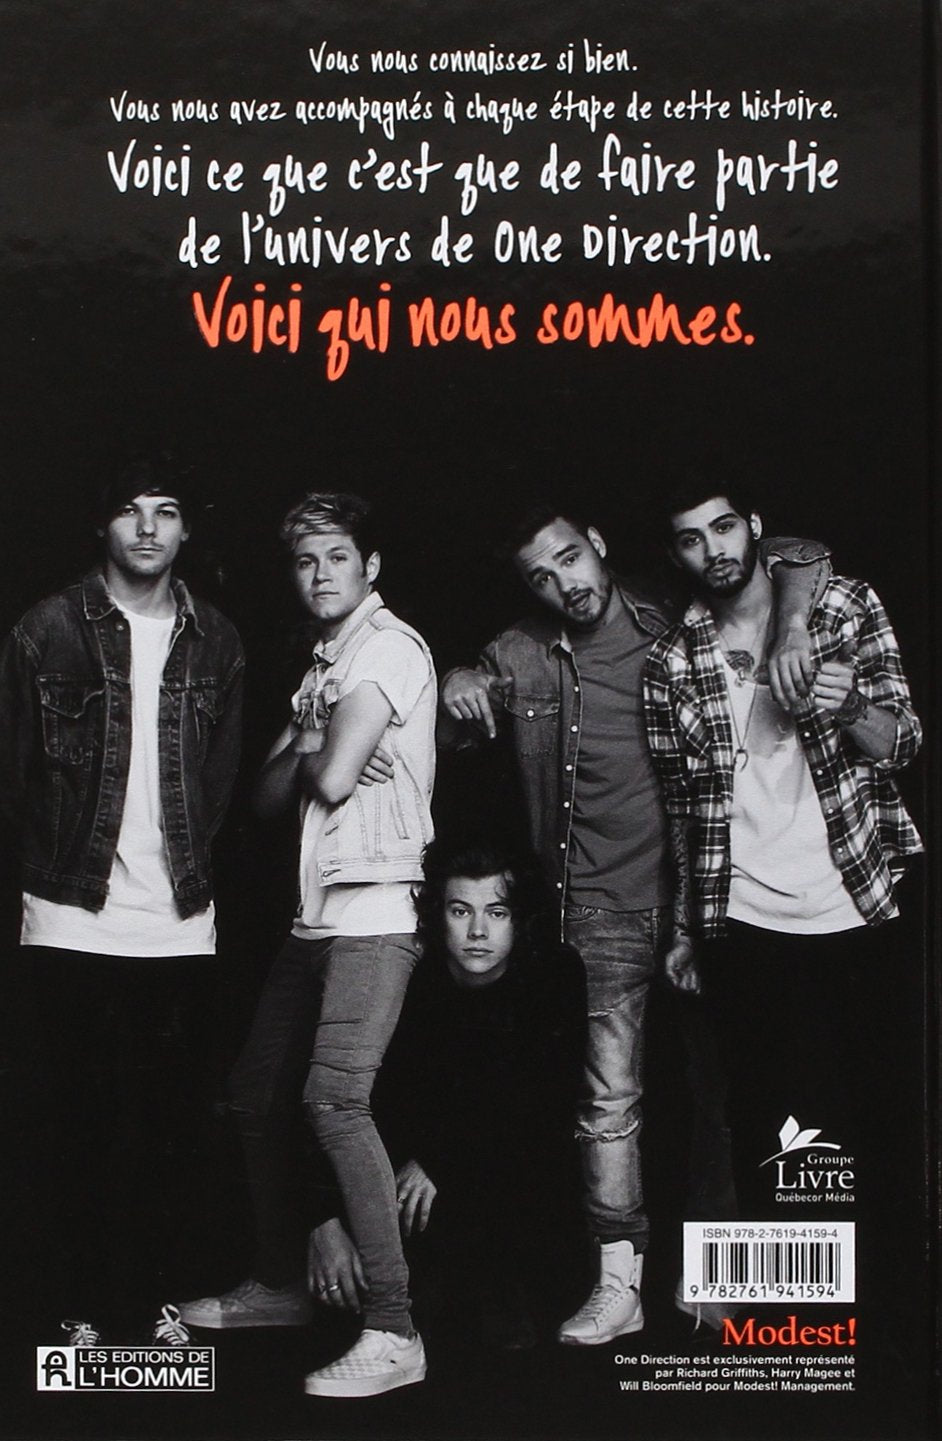 Qui nous sommes - One Direction: Notre autobiographie (One Direction)